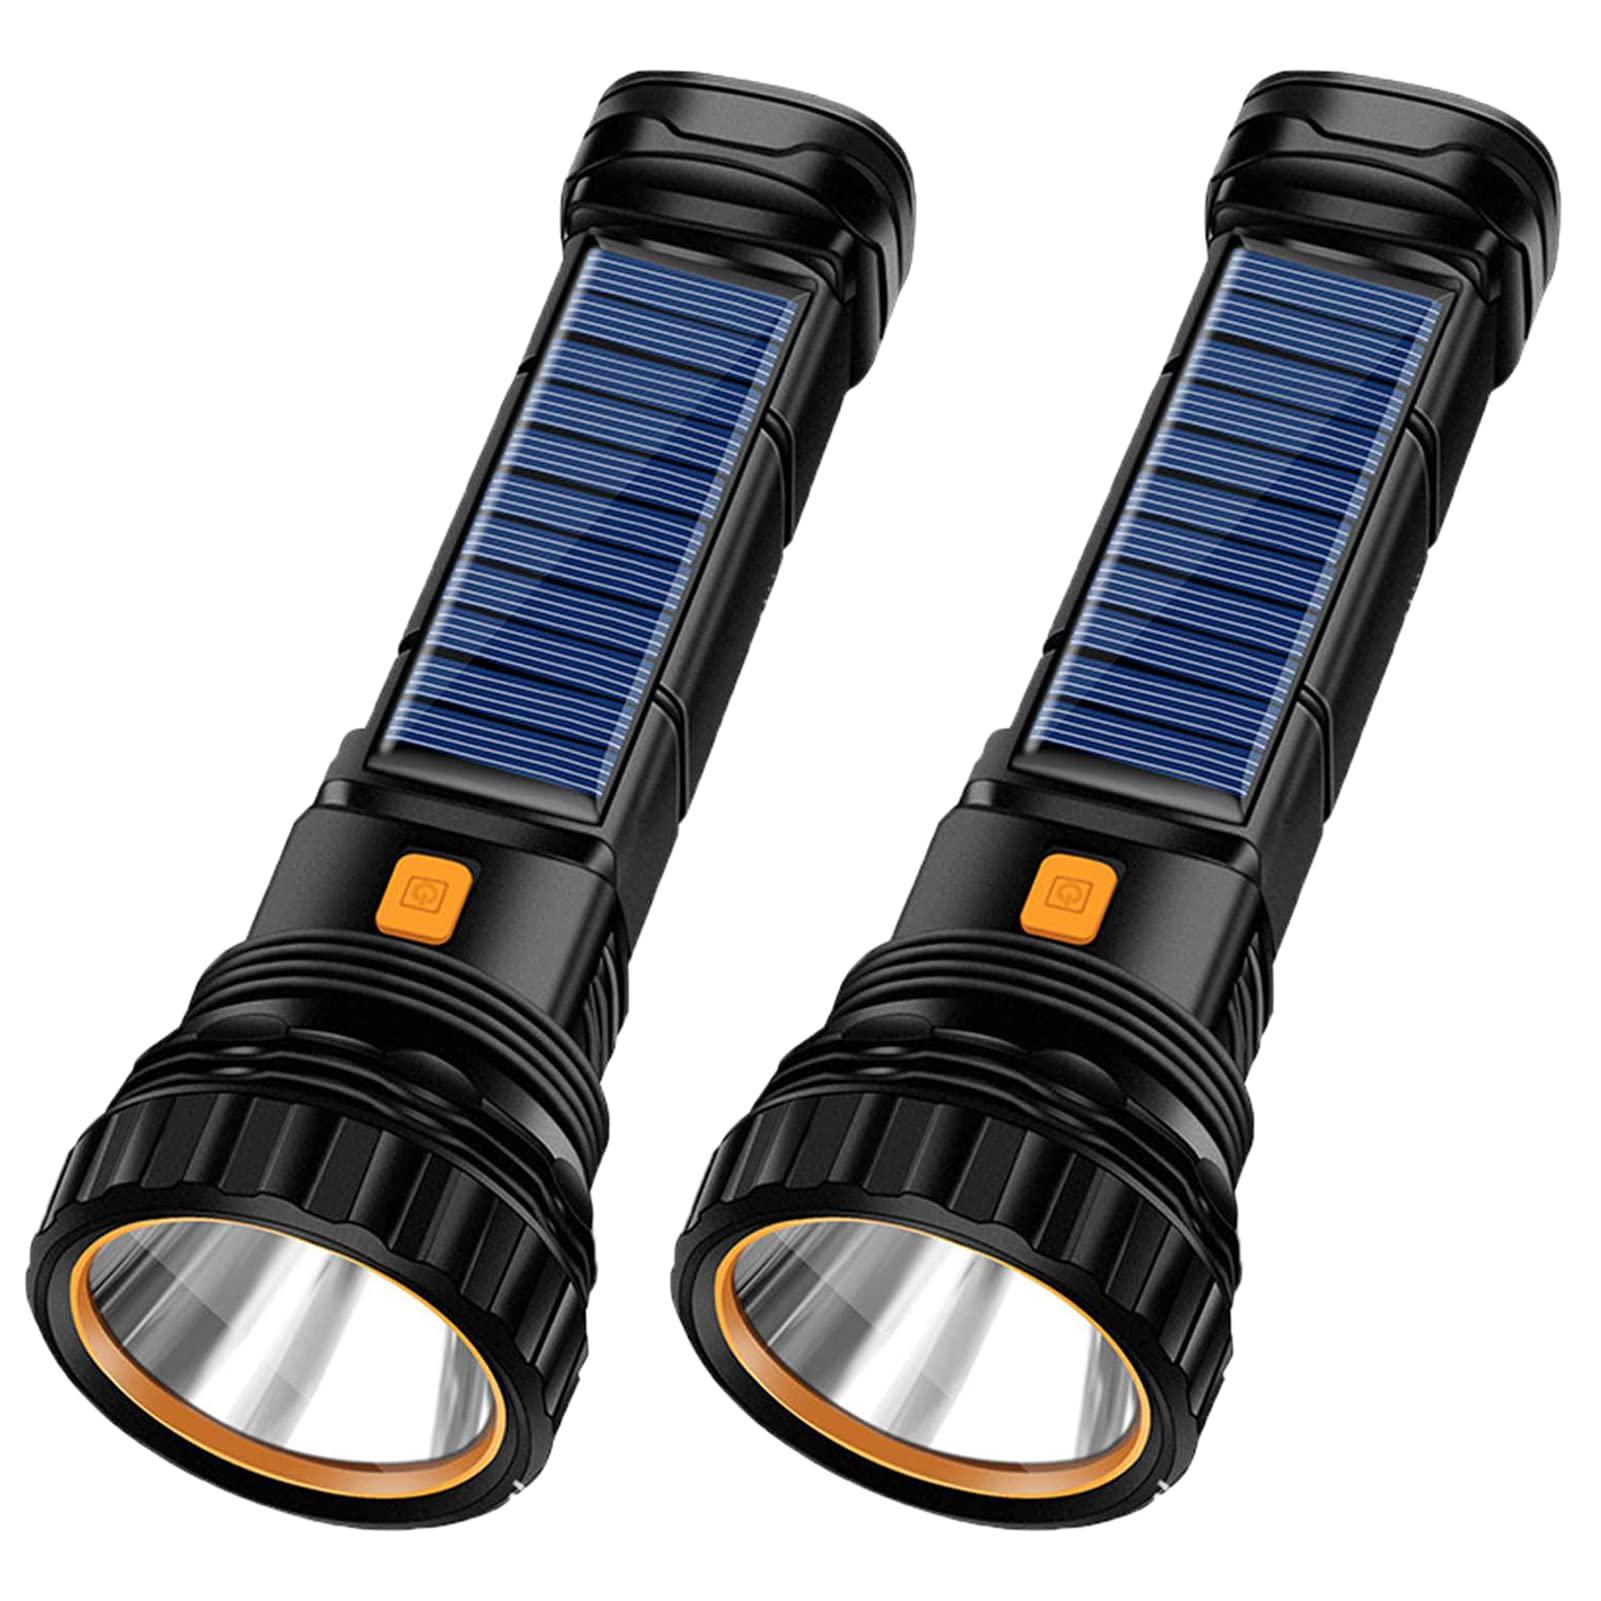 e-shidai 2pcs solar/rechargeable multi function 1000 lumens led flashlight, with emergency strobe light and 1200 mah battery,